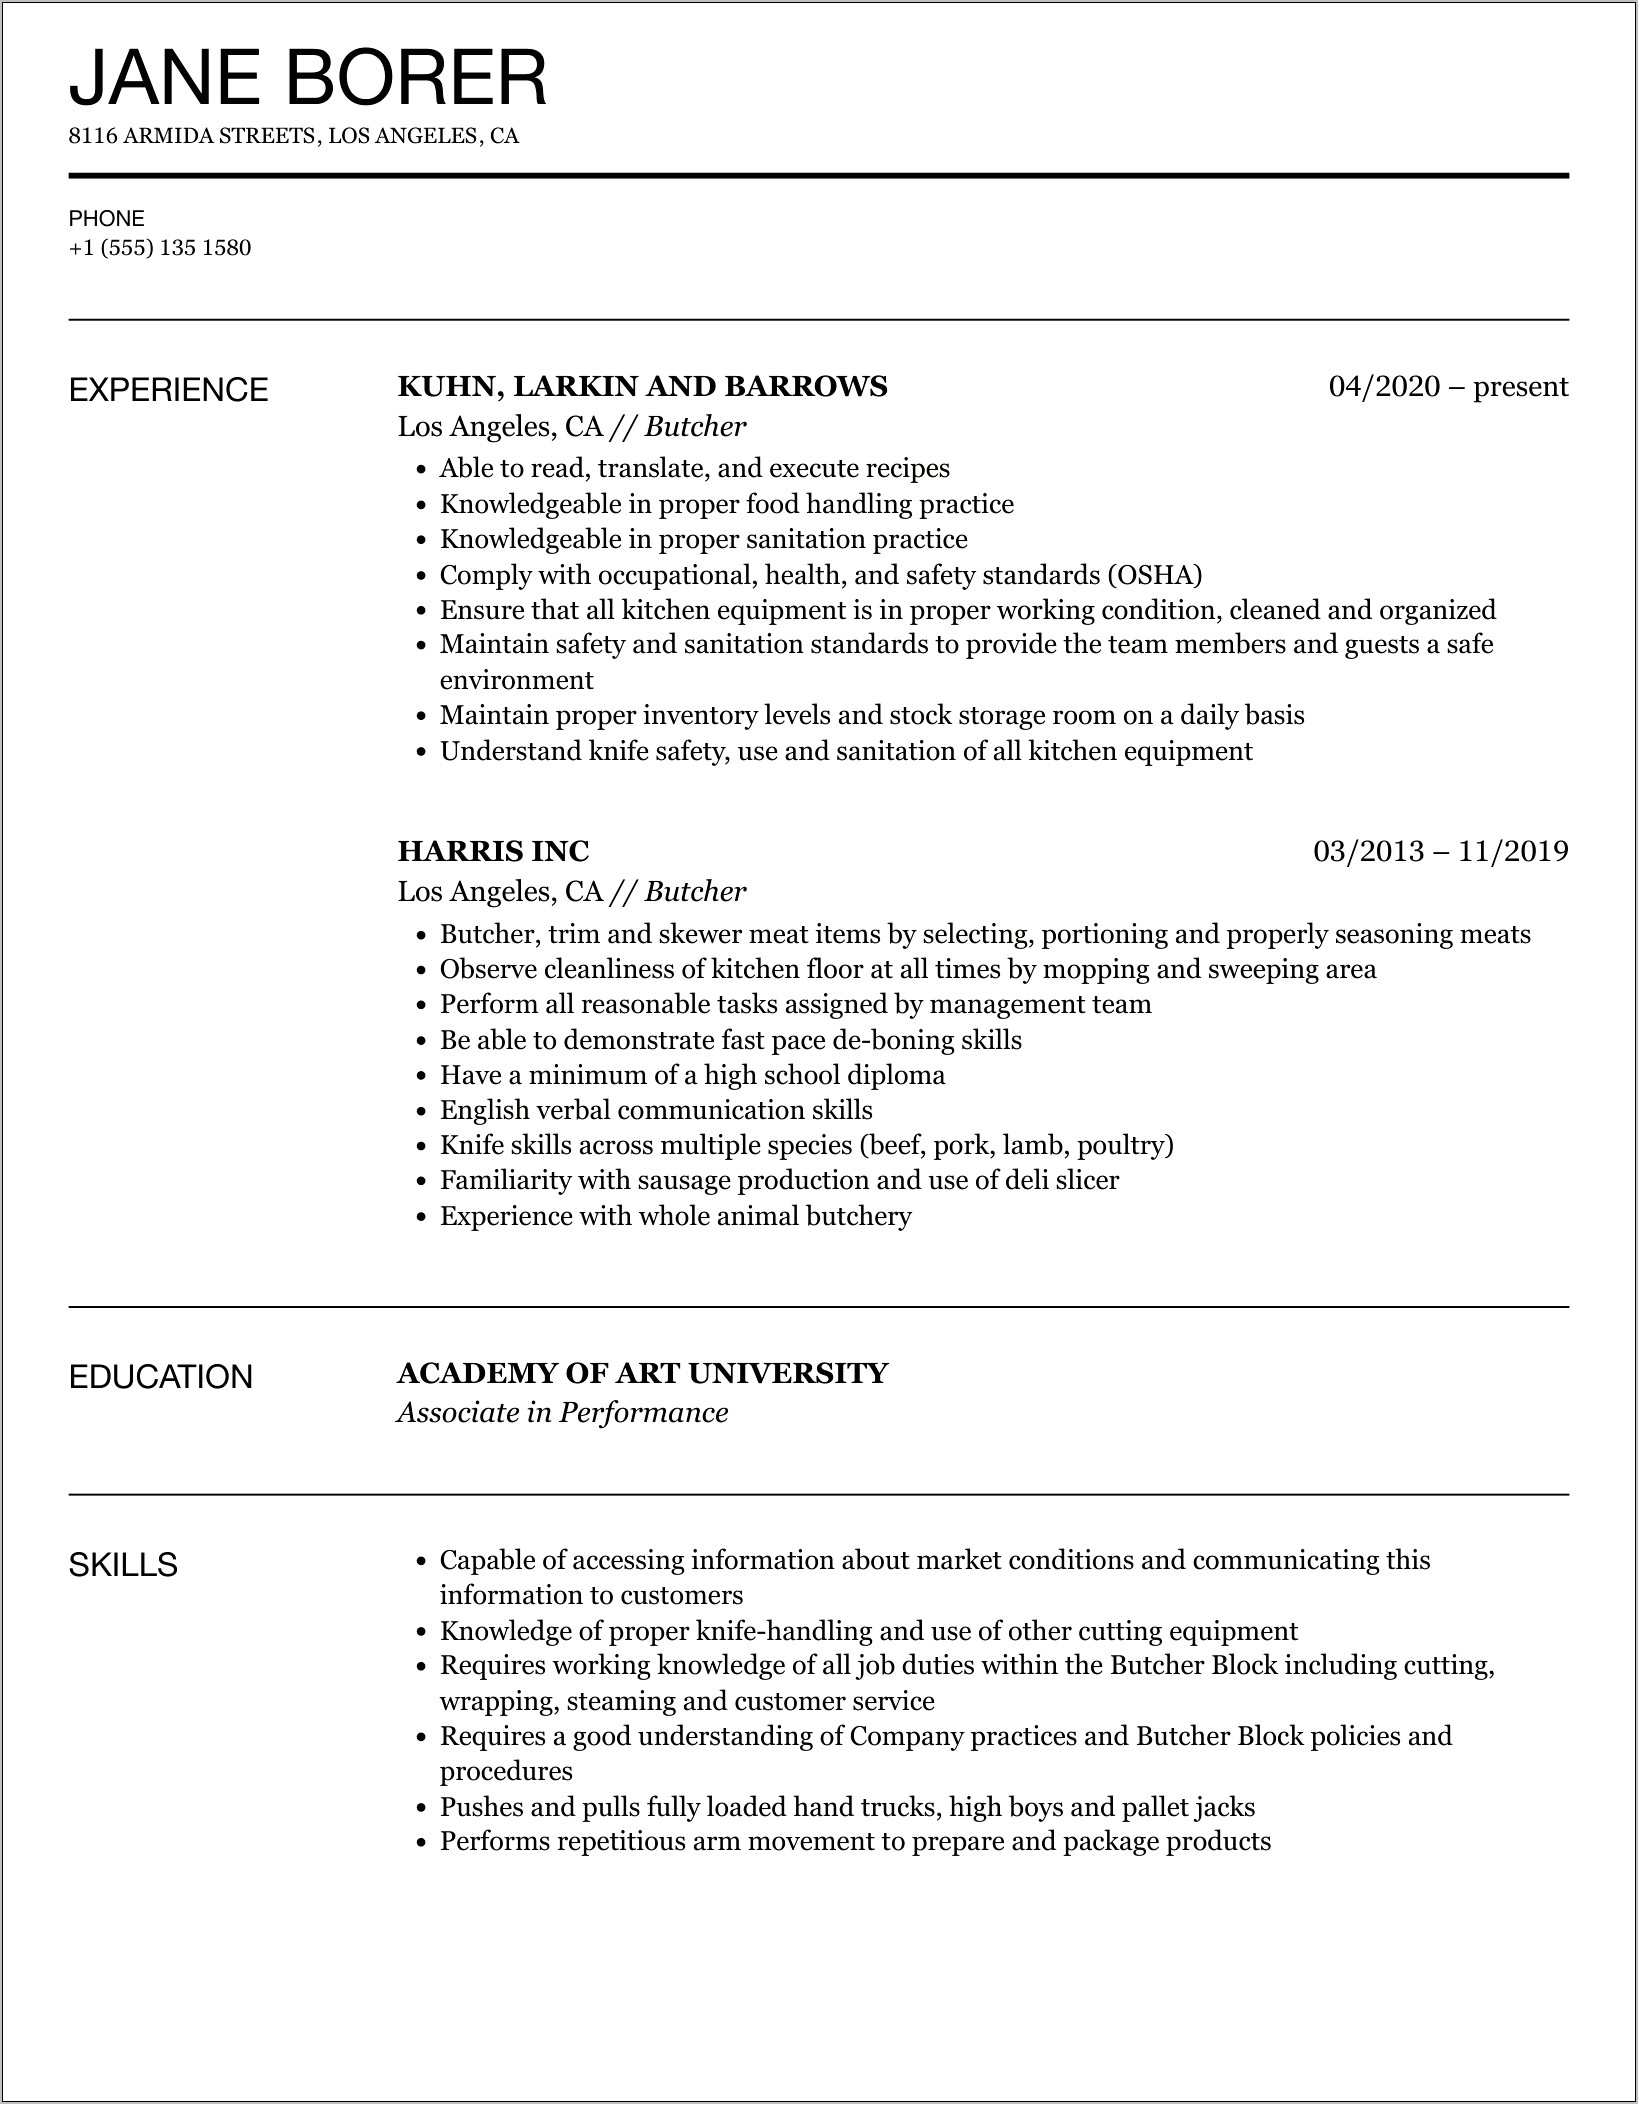 Sample Resume For Butcher Job